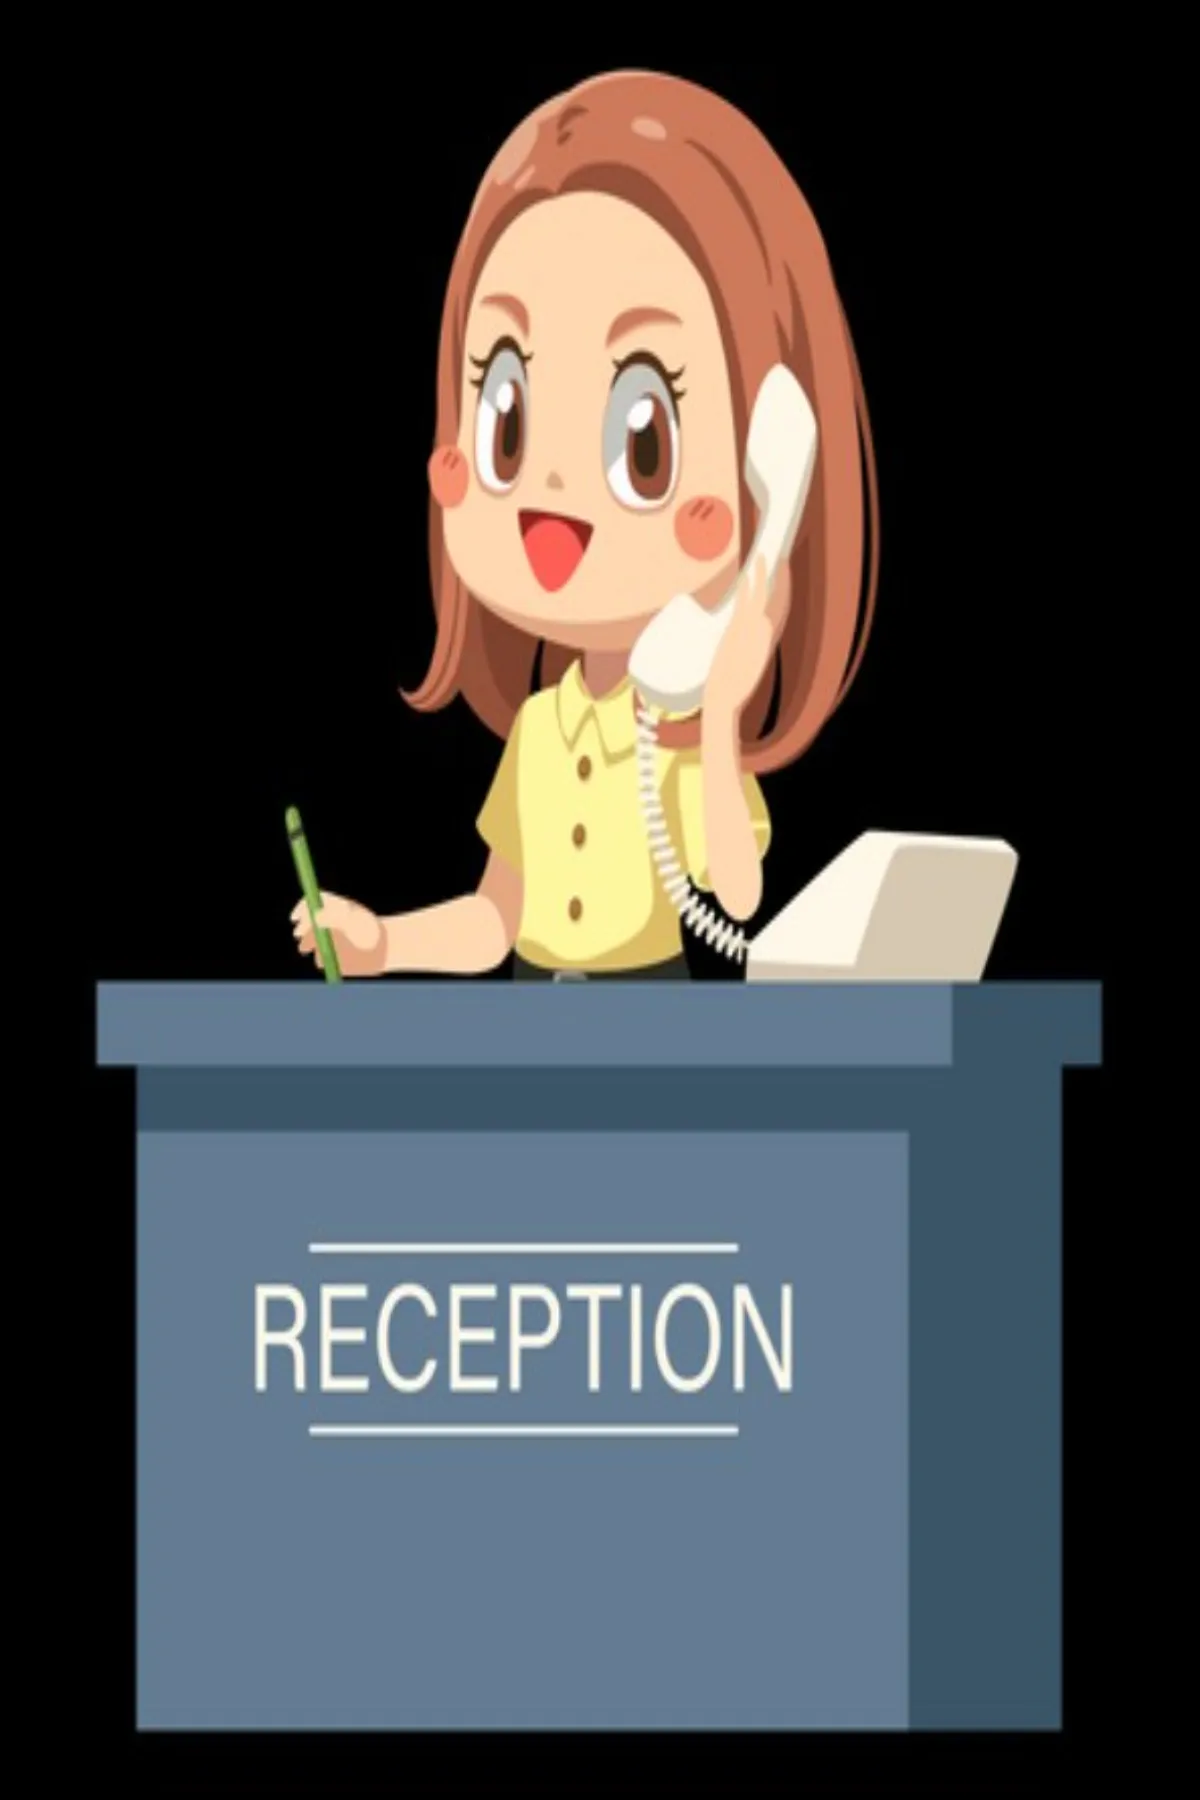 receptionist jobs in dubai